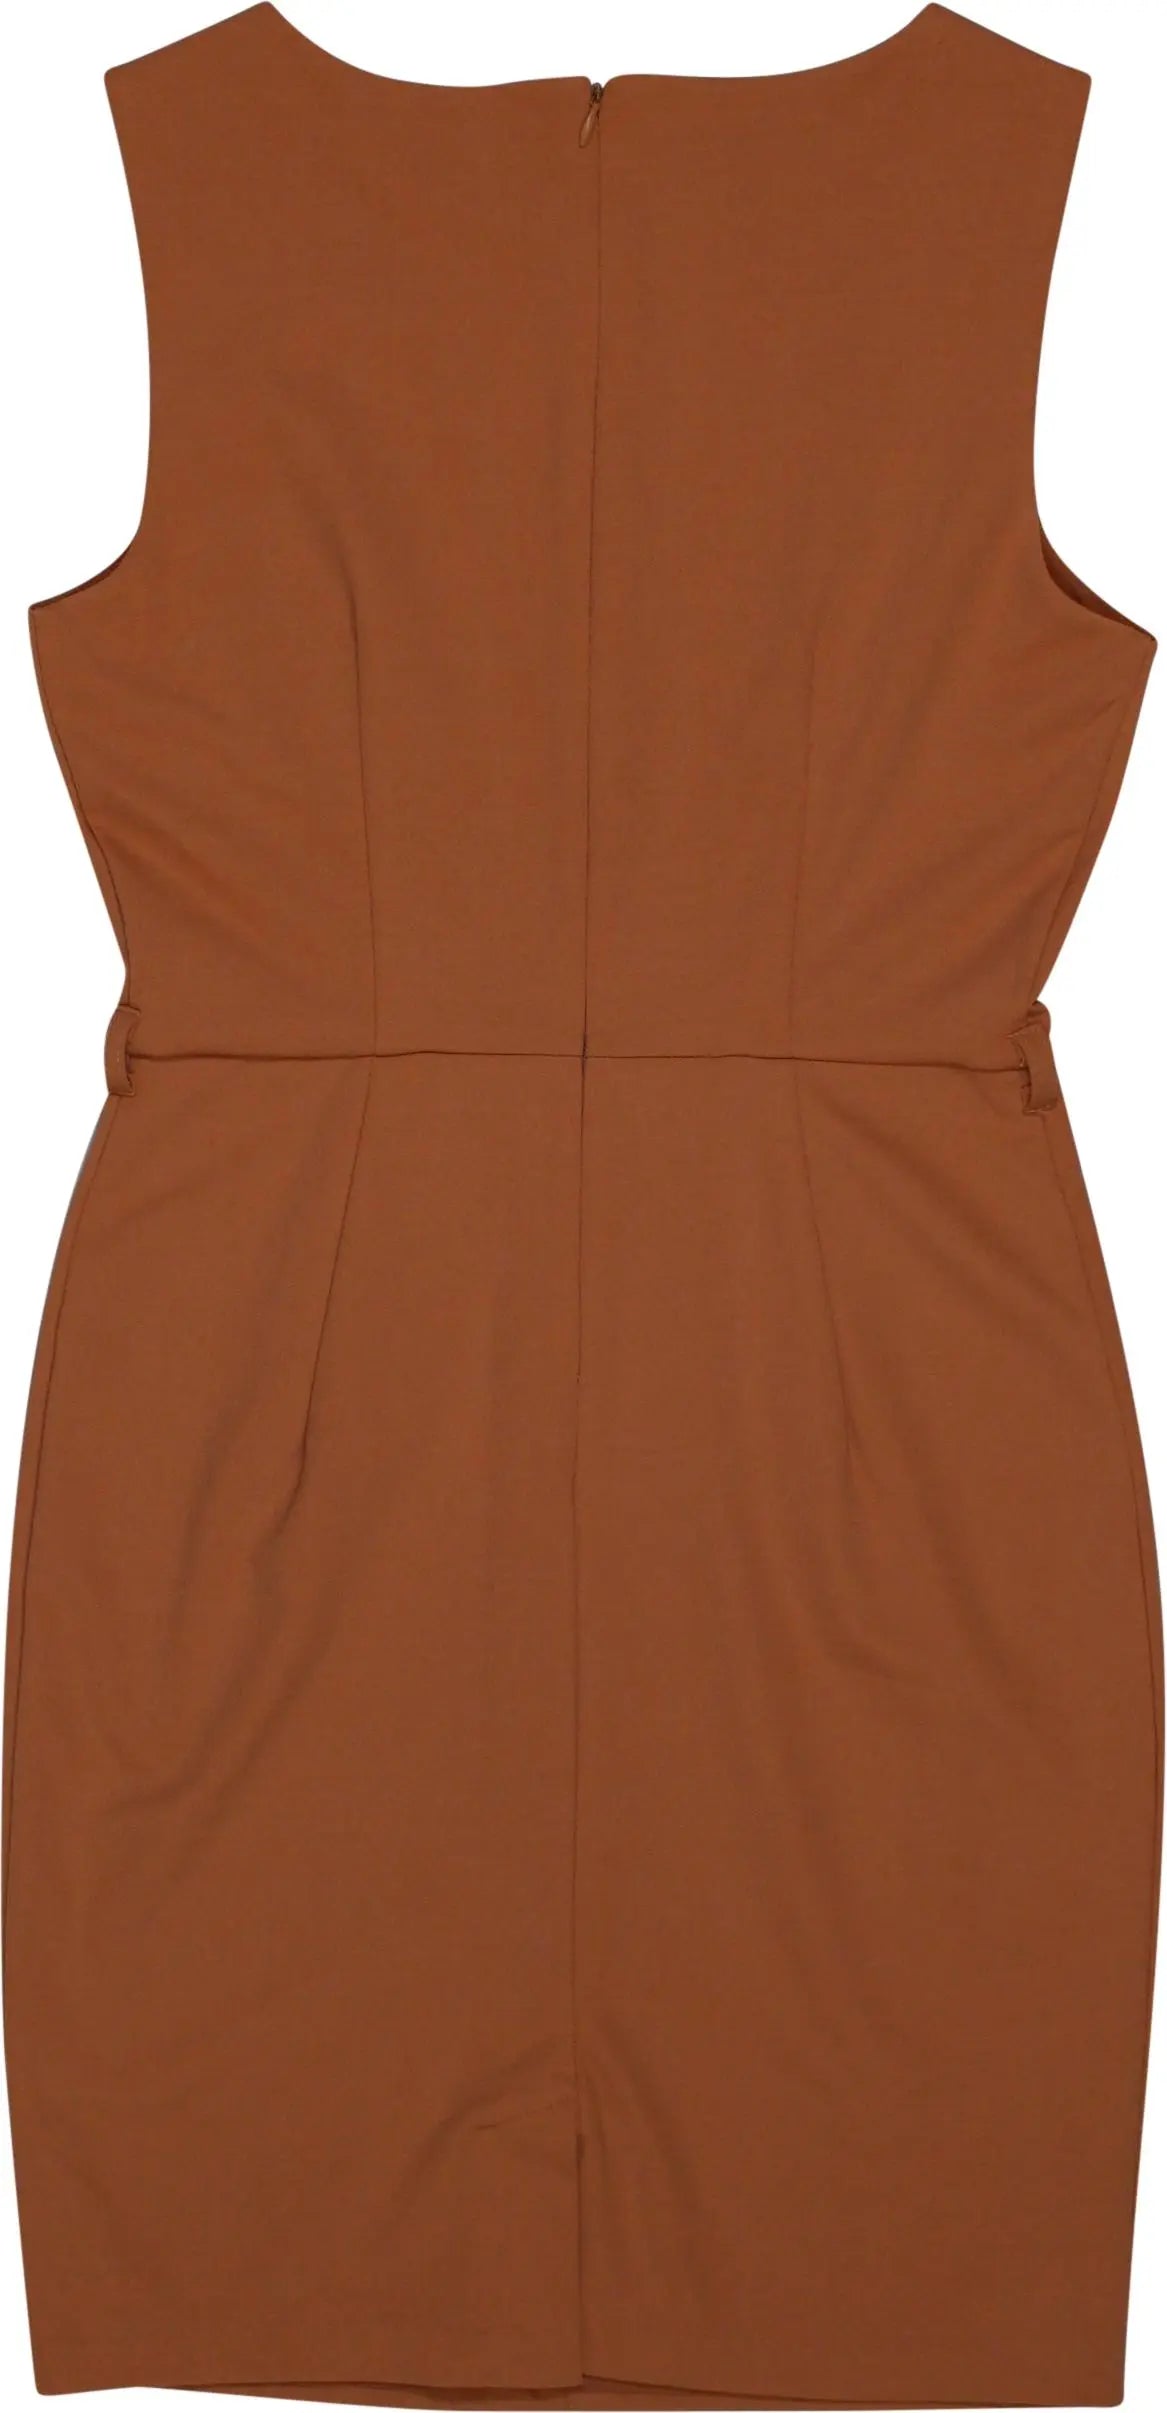 Darling - Short Dress- ThriftTale.com - Vintage and second handclothing